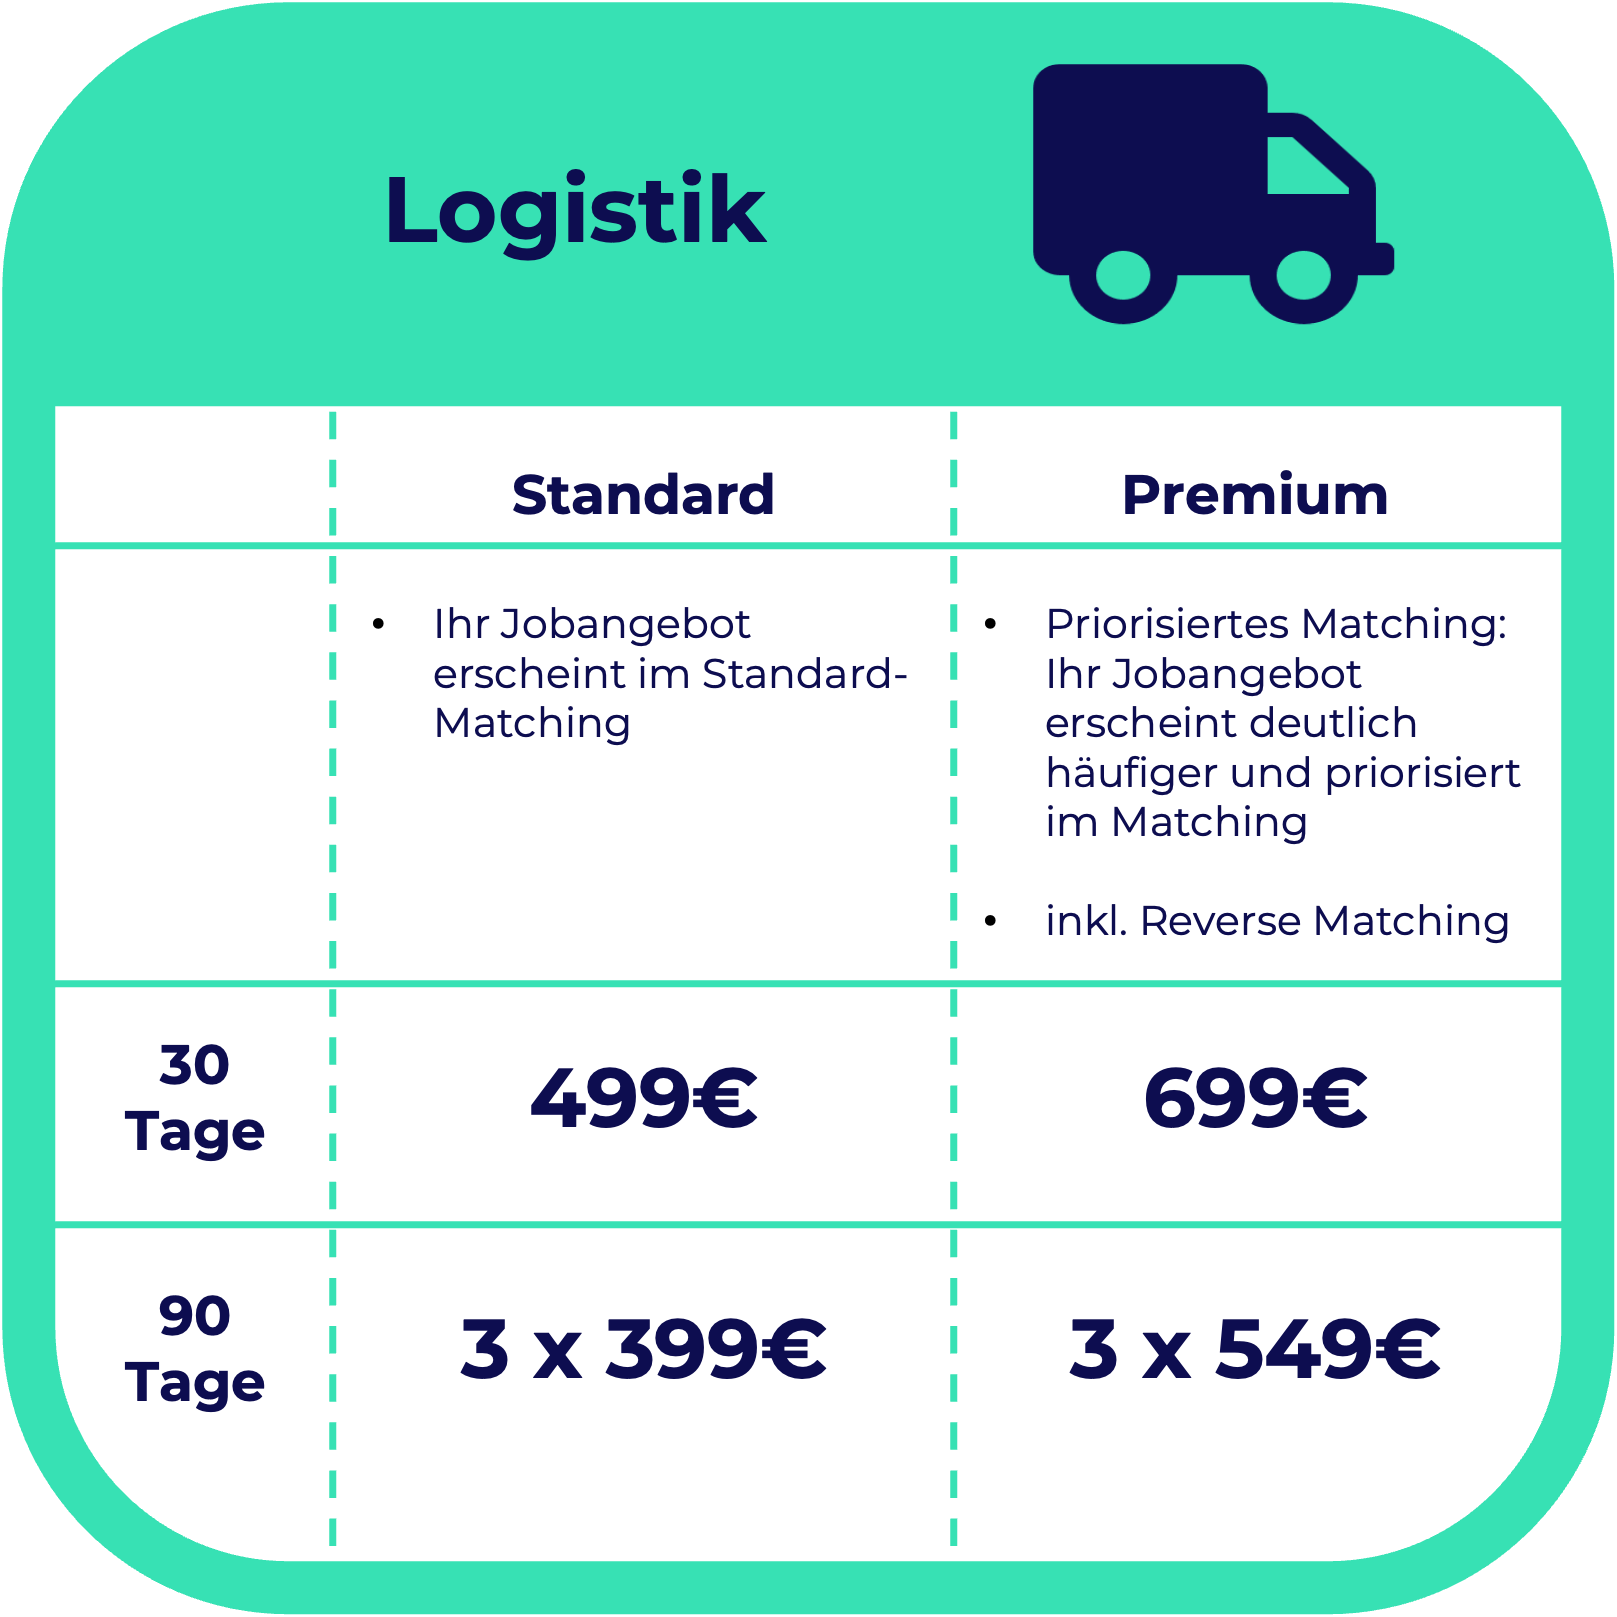 Logistik_pricing